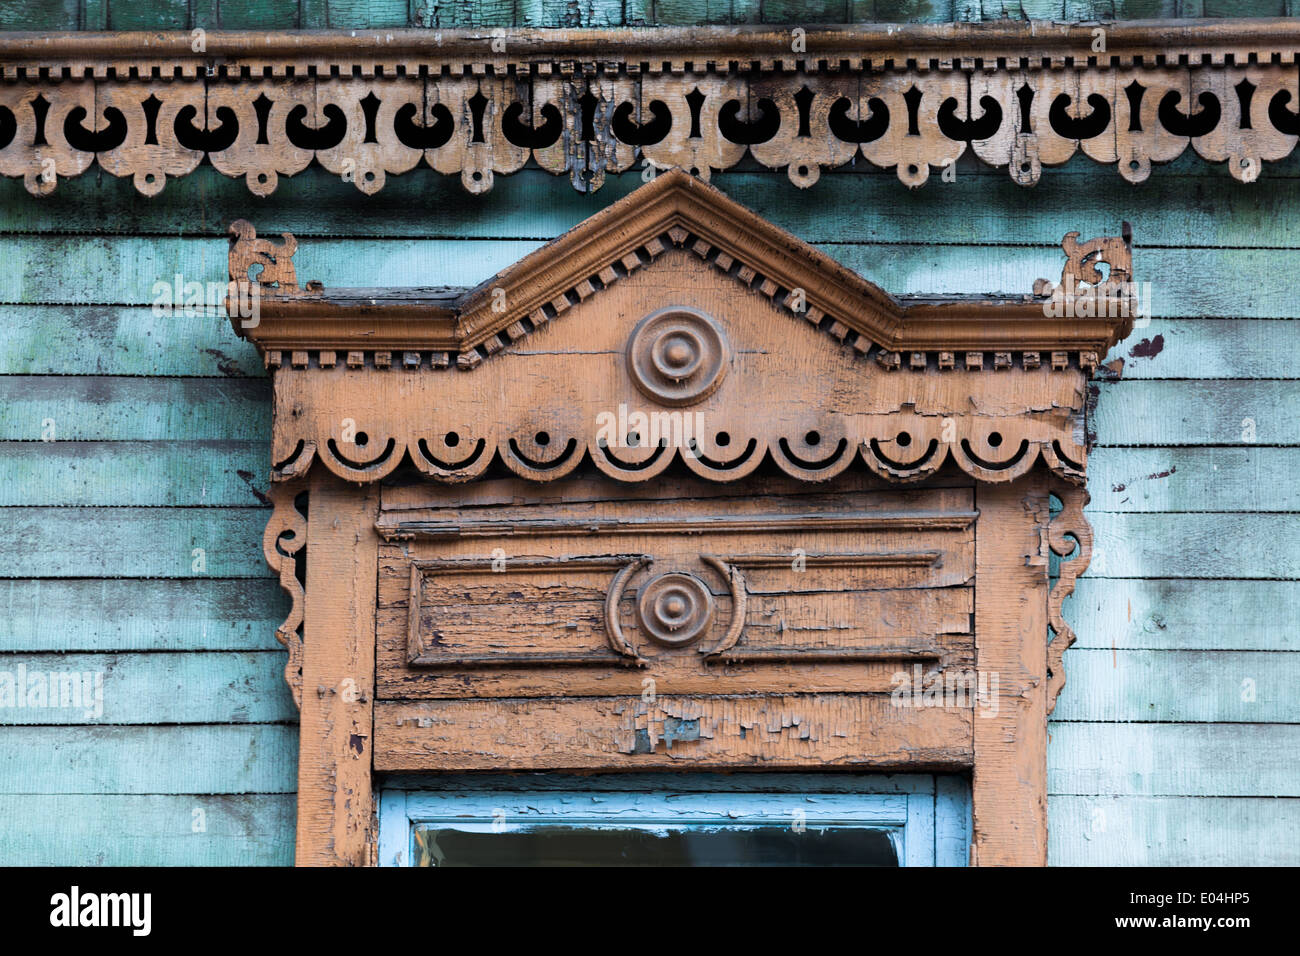 Part of traditional wooden building in Irkutsk, Siberia, Russia Stock Photo